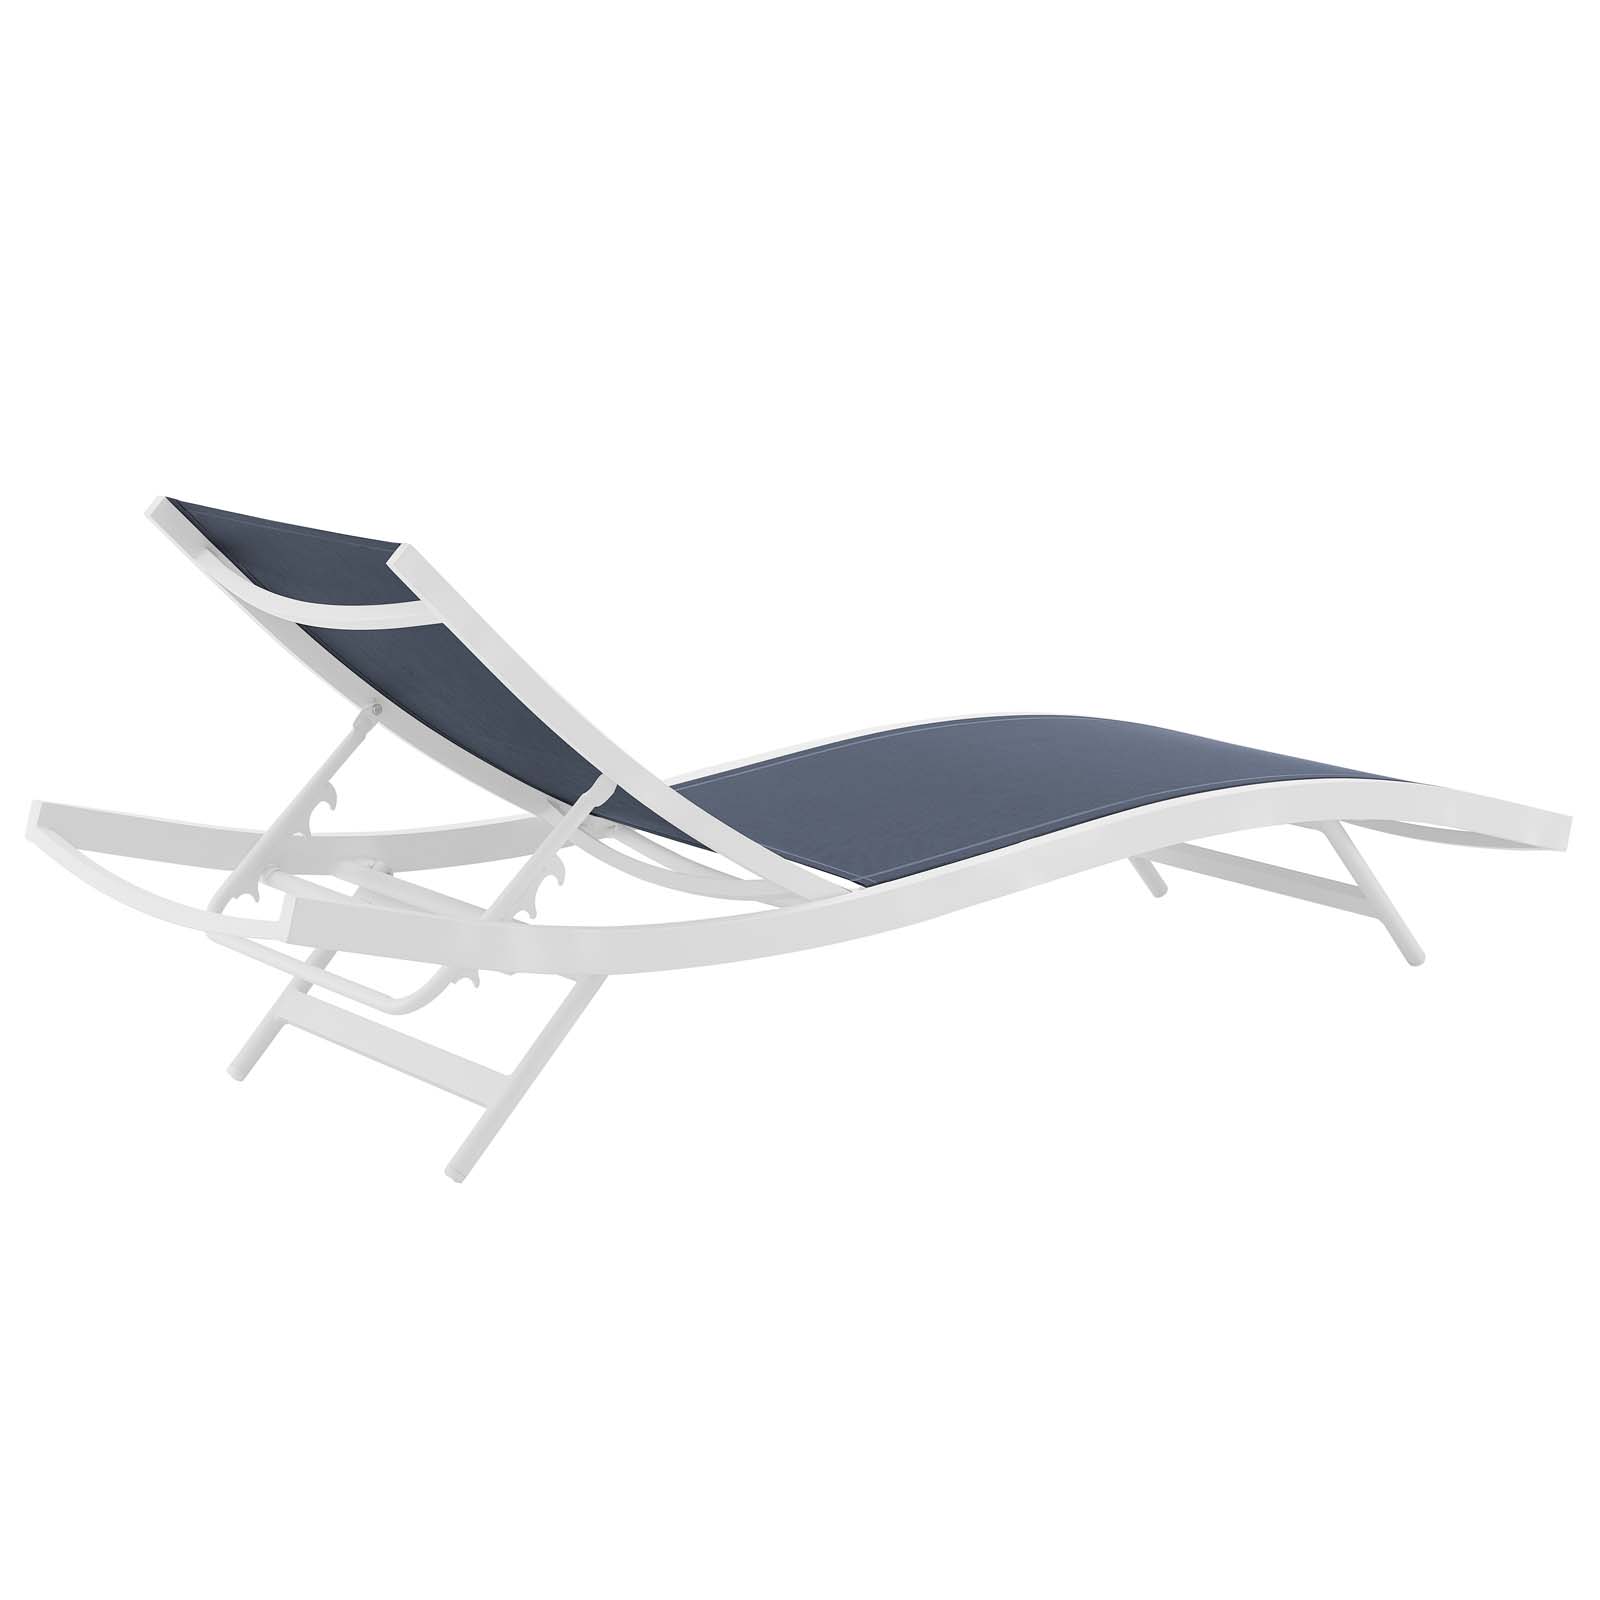 Modern Contemporary Urban Design Outdoor Patio Balcony Garden Furniture Lounge Chair Chaise, Fabric Aluminium, White Navy - image 4 of 7